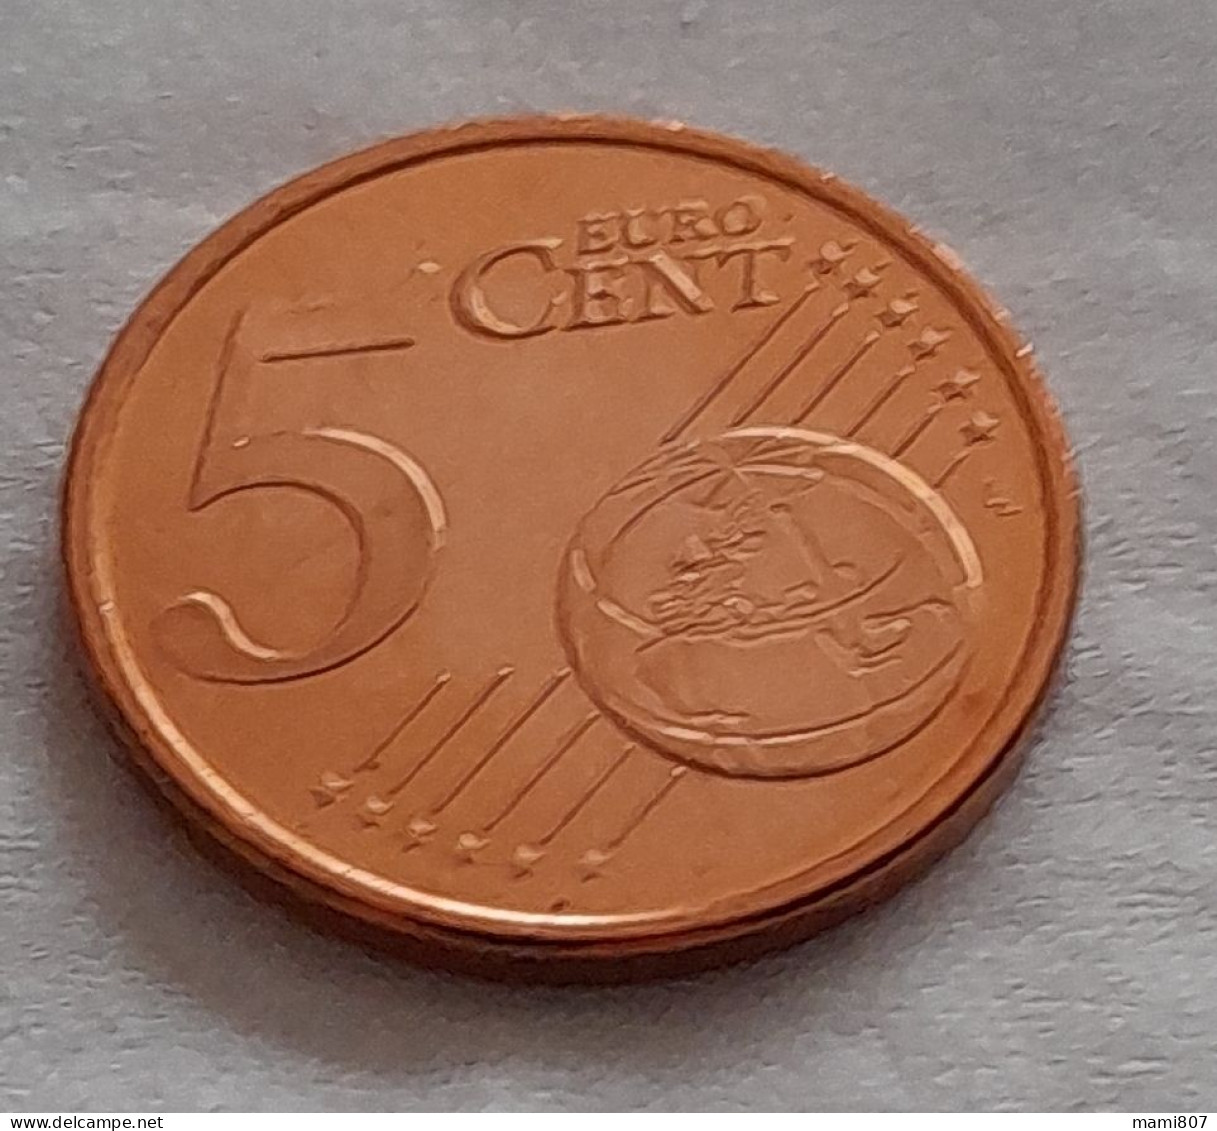 IRLANDE - 5 Cme EURO 2002 - SUP - Ireland